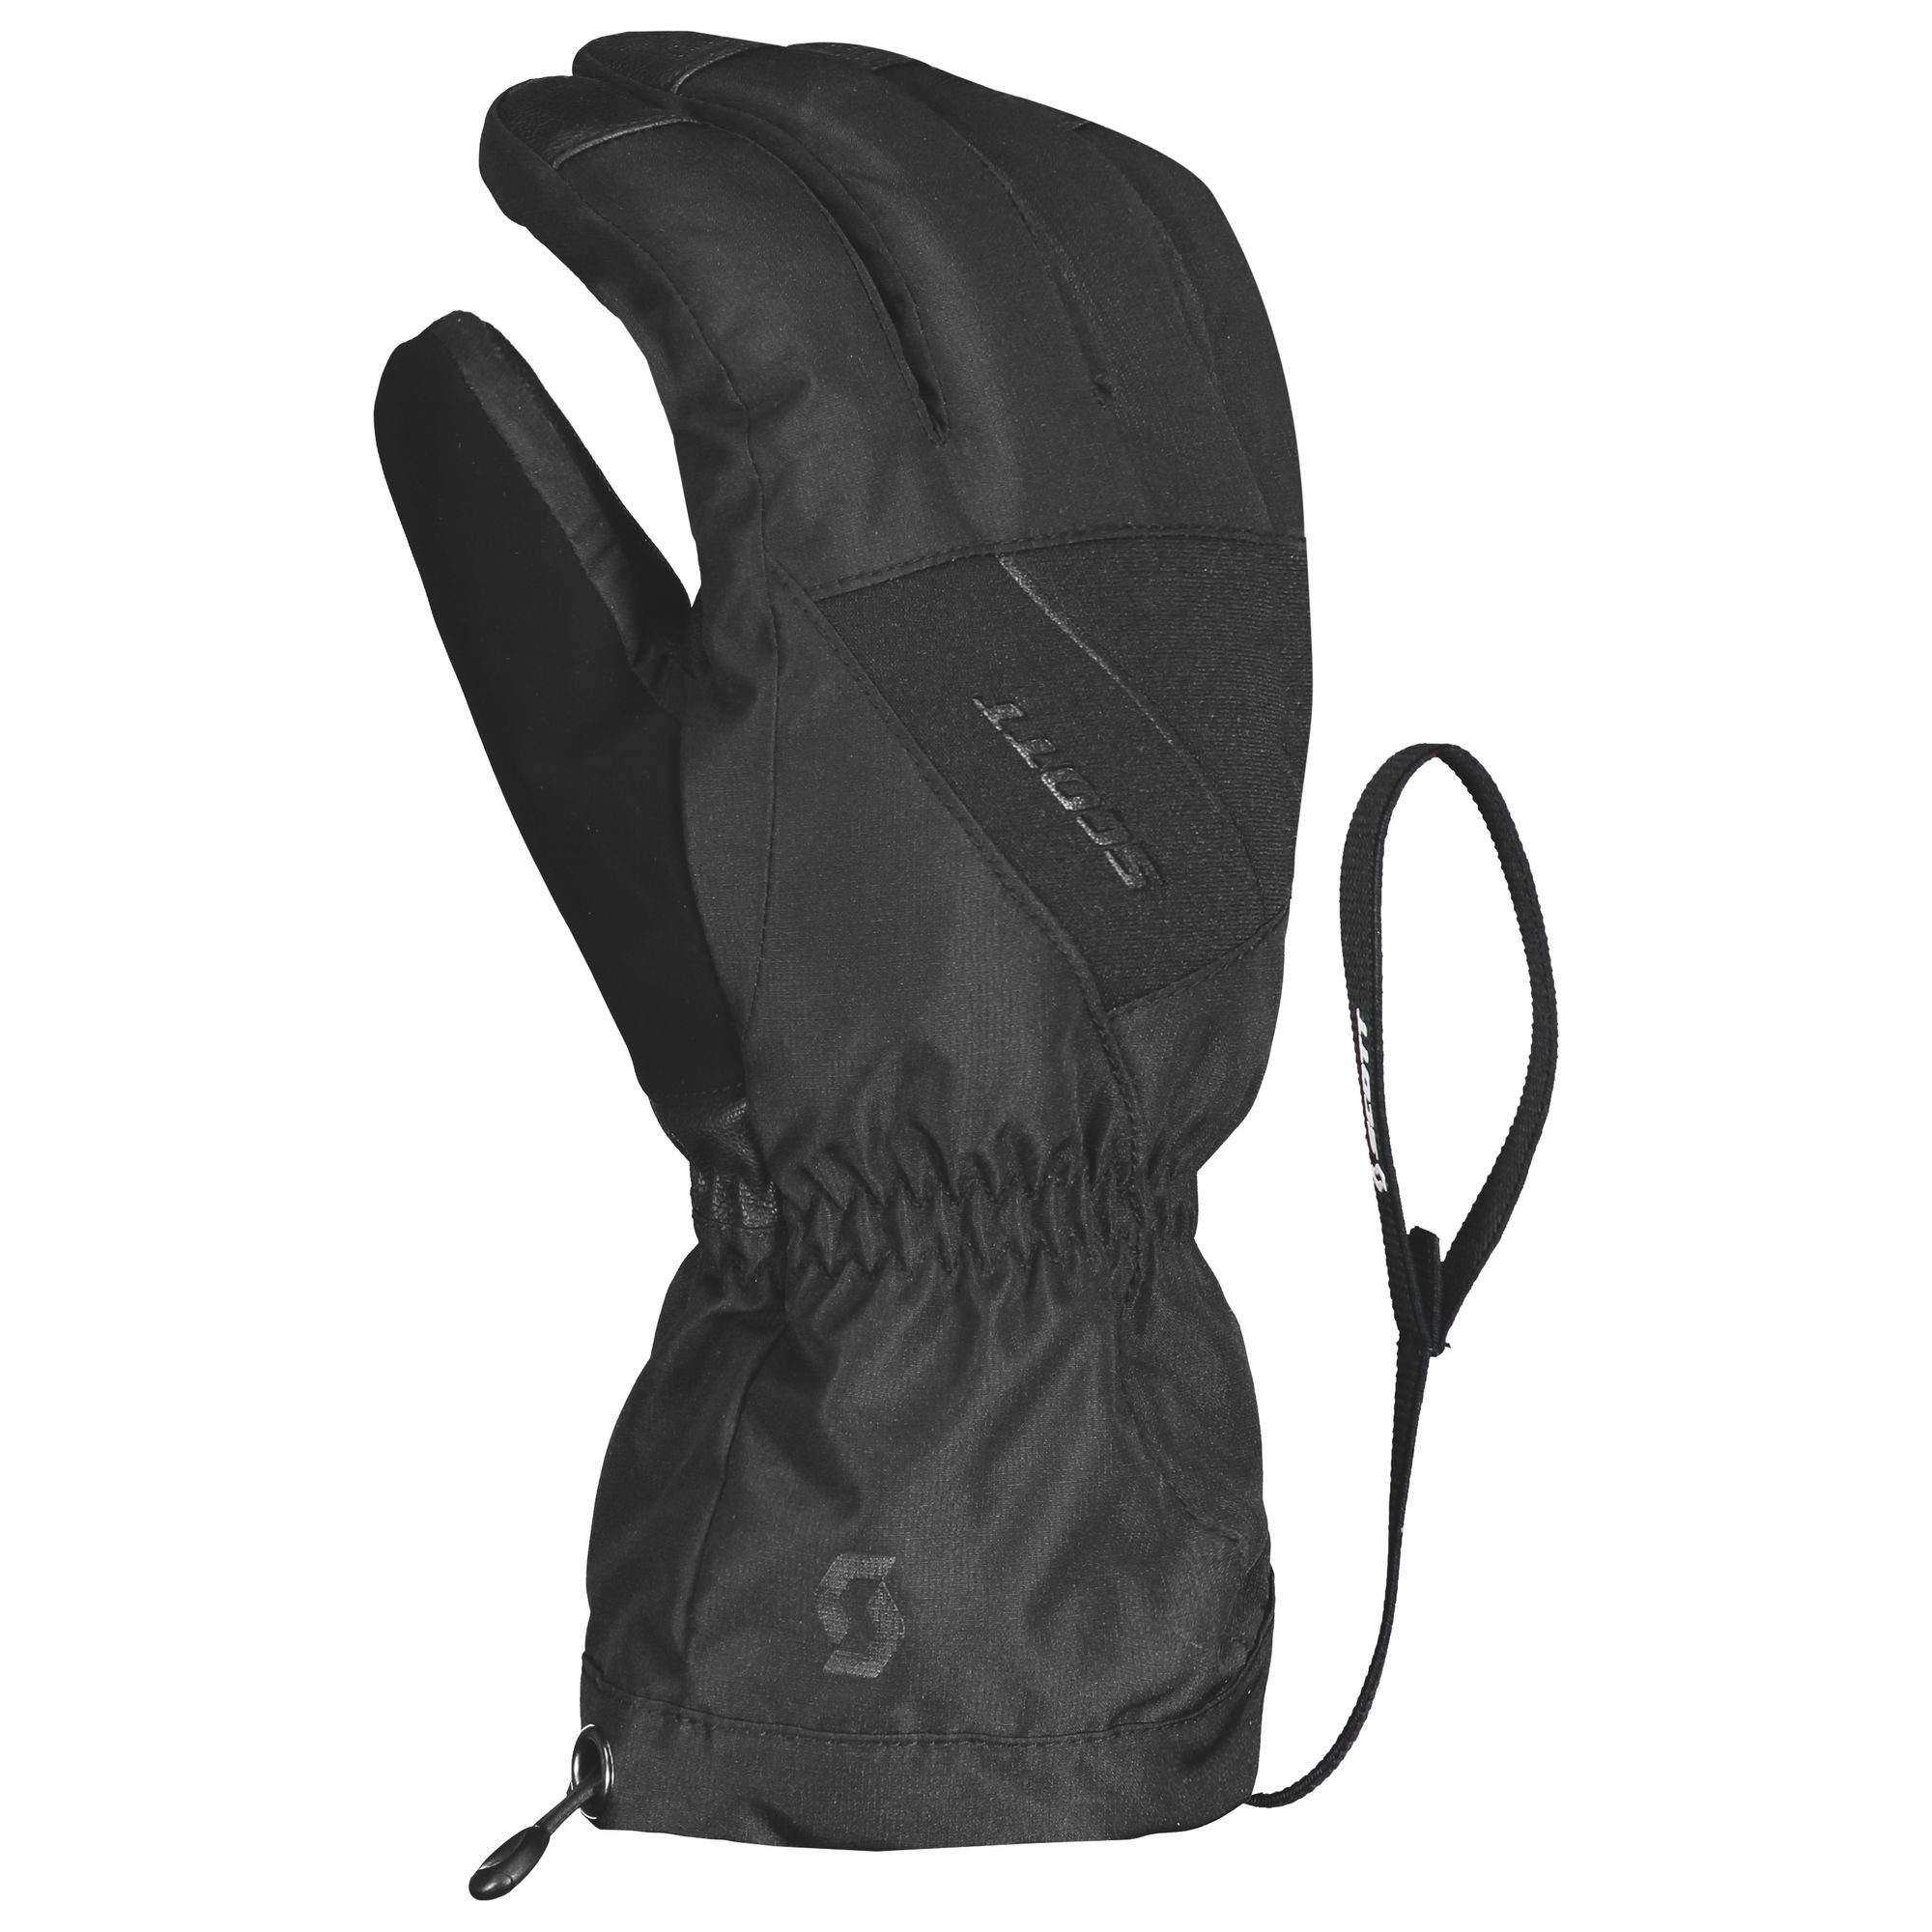 Herren Skihandschuhe Snowboardhandschuhe Winterhandschuhe Handschuhe Größe S-2XL 